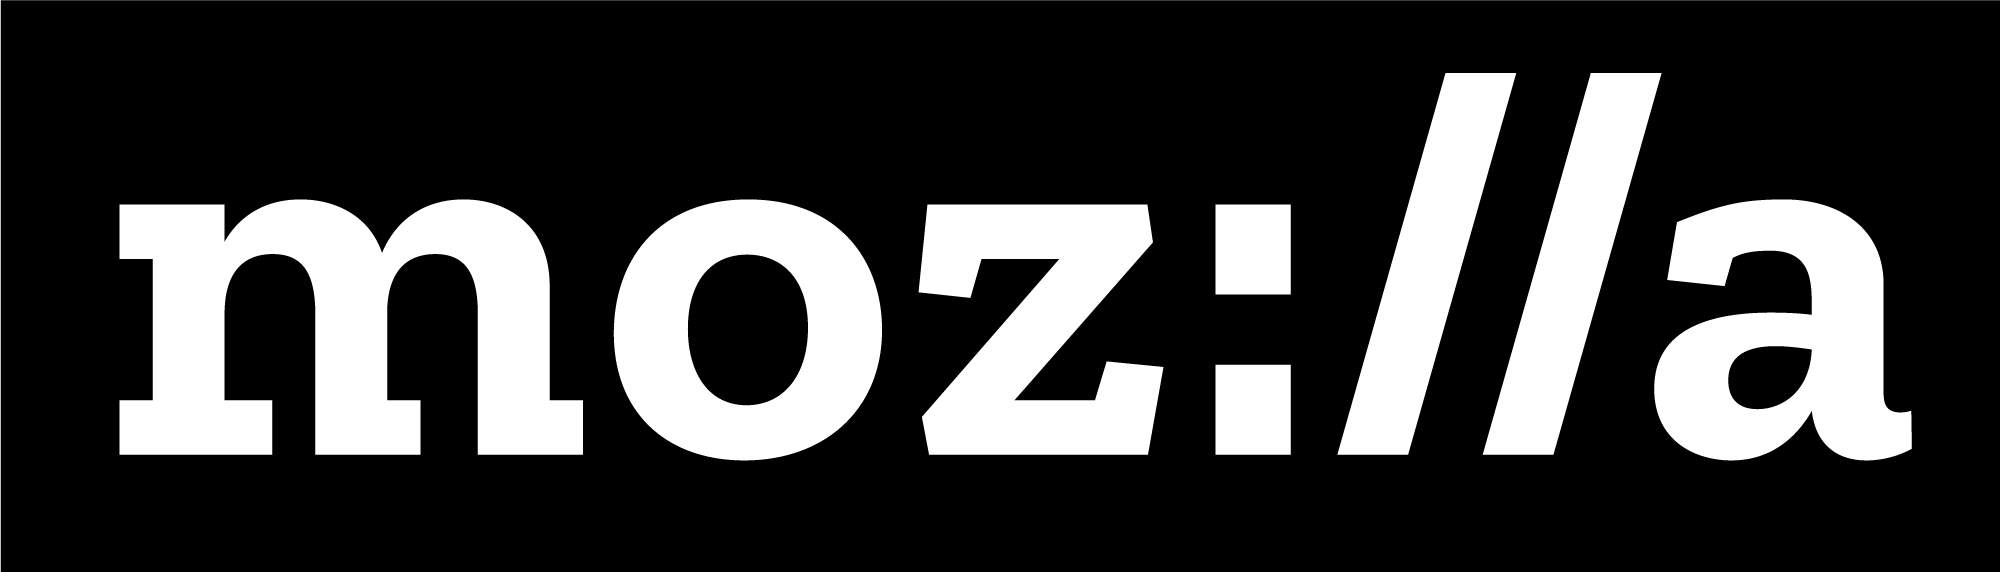 Mozilla logo bw rgb